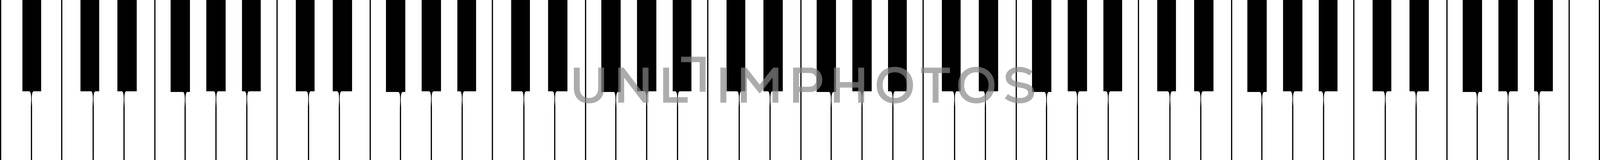 Piano keyboard - isolated illustration